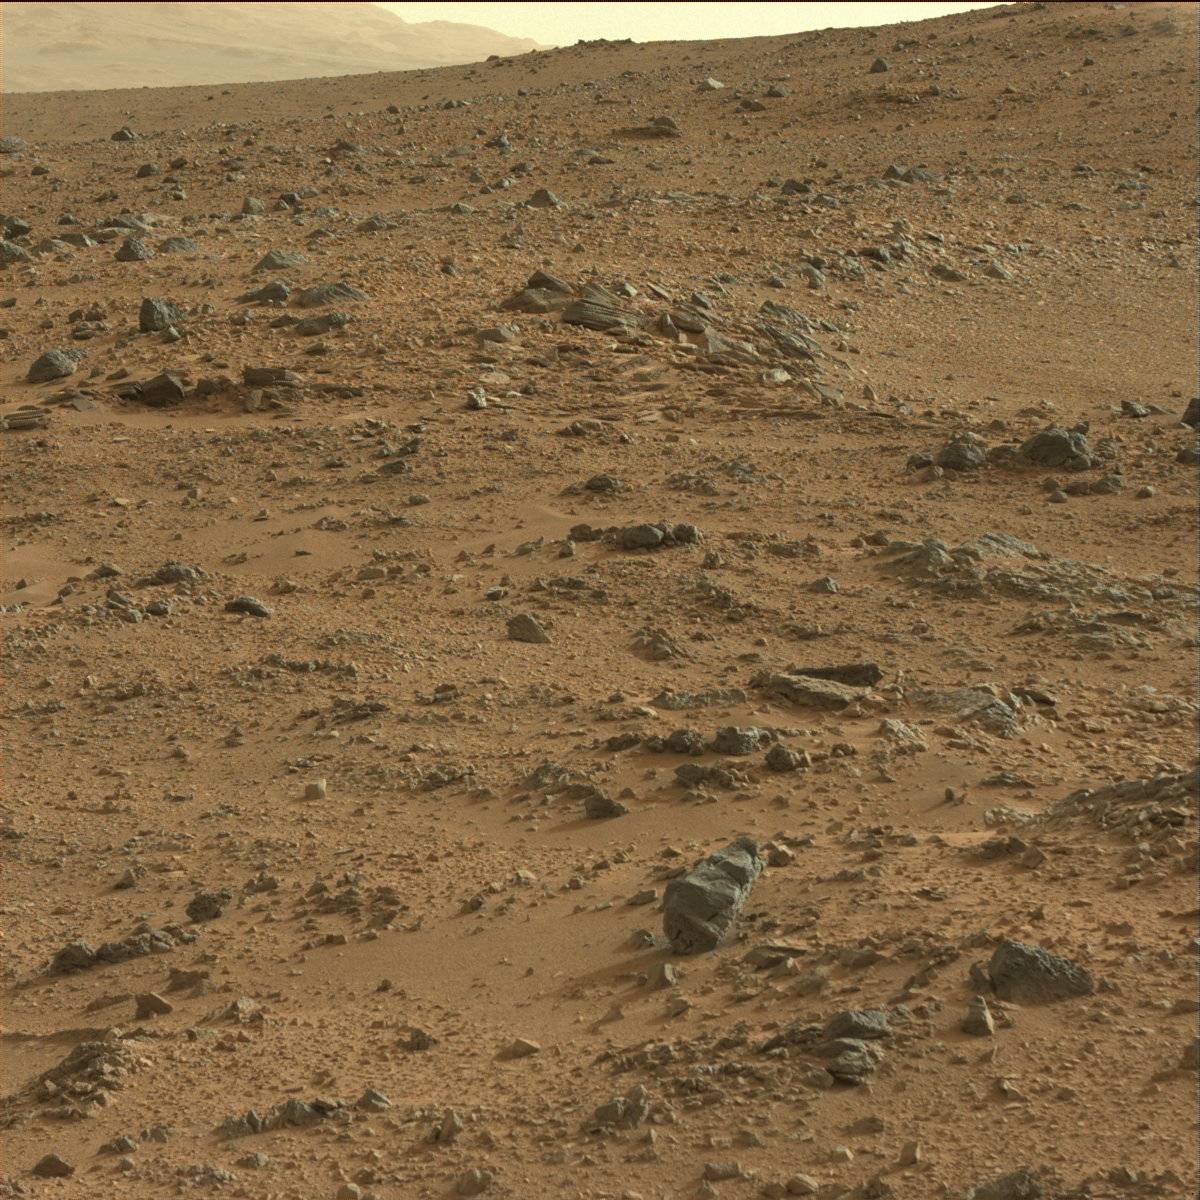 Nasa S Mars Rover Curiosity Acquired This Image Using Its Mast Camera